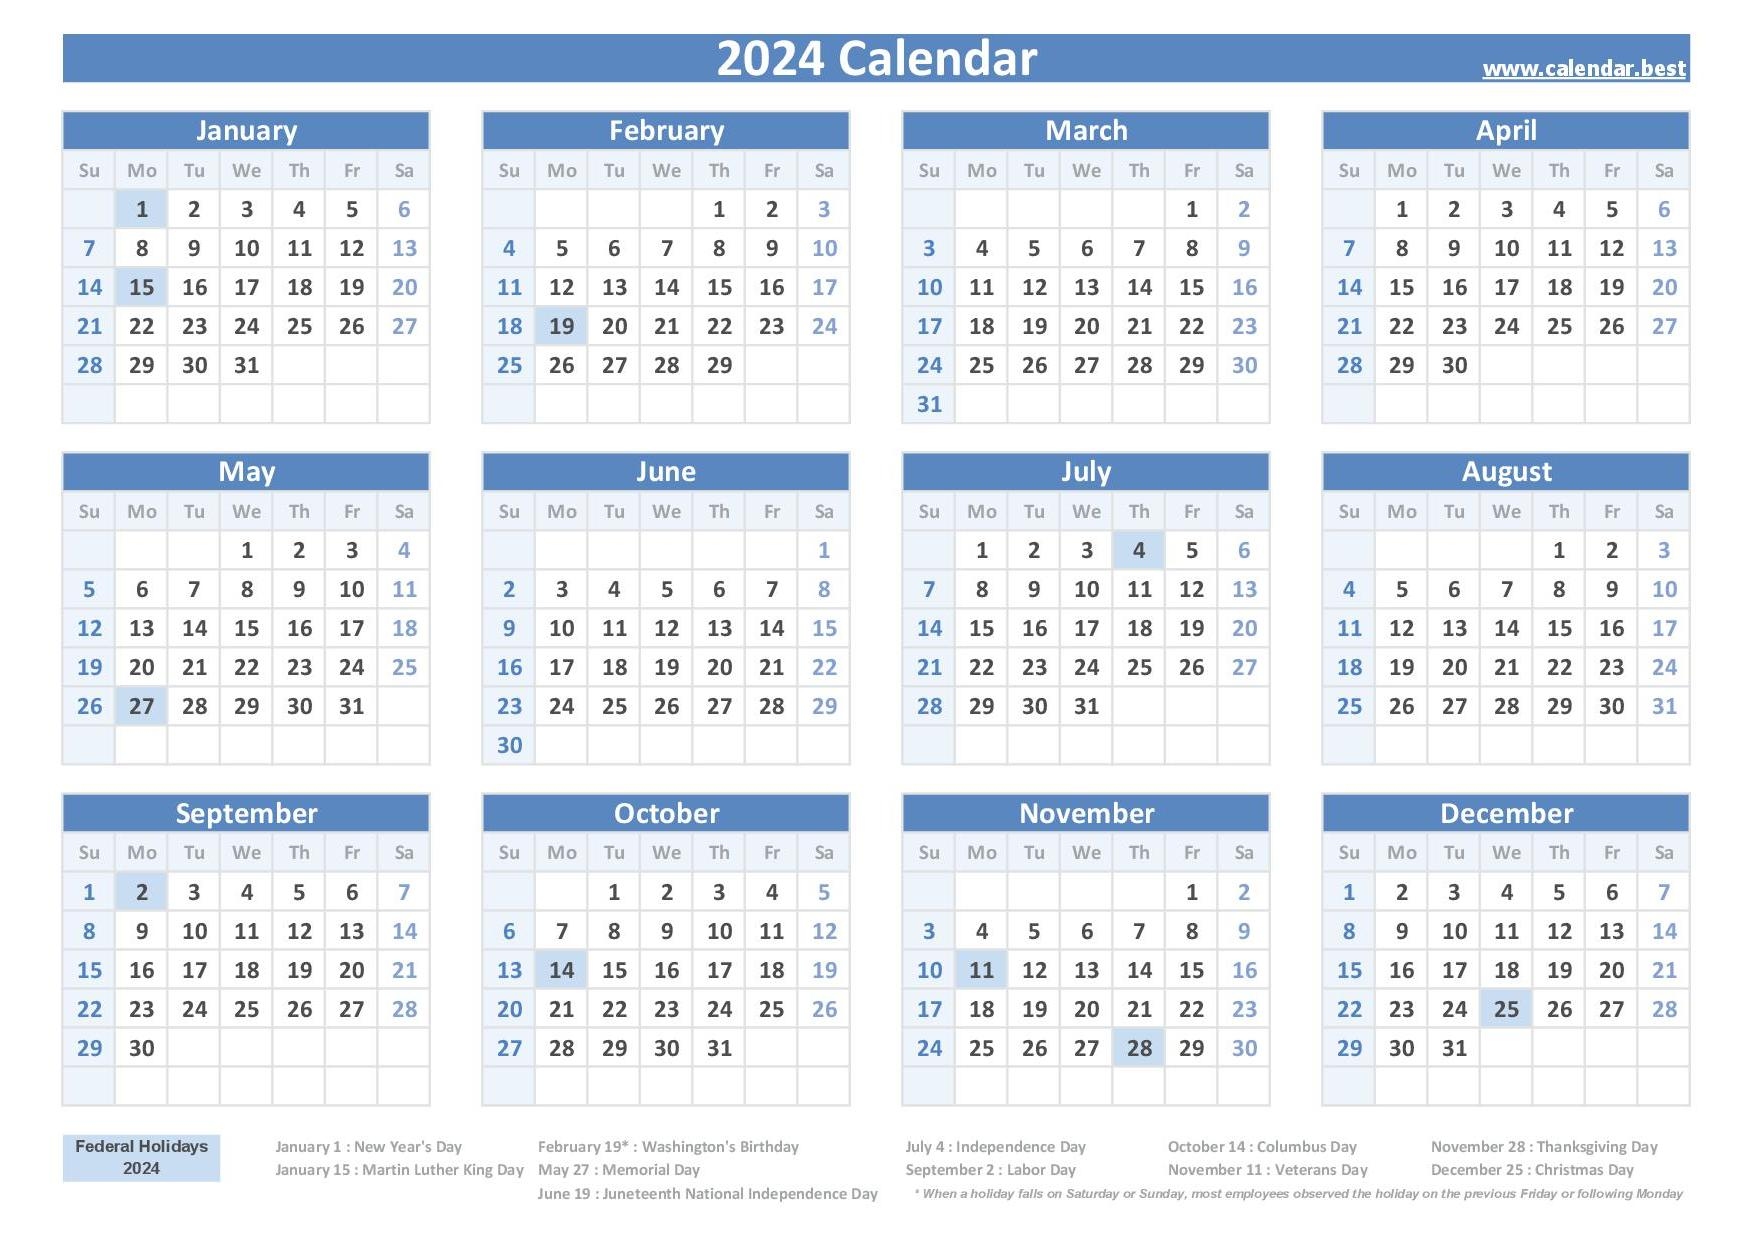 2024 Us Federal Holiday Calendar Printable Bill Marjie - Free Printable 2024 Calendar With Holidays December